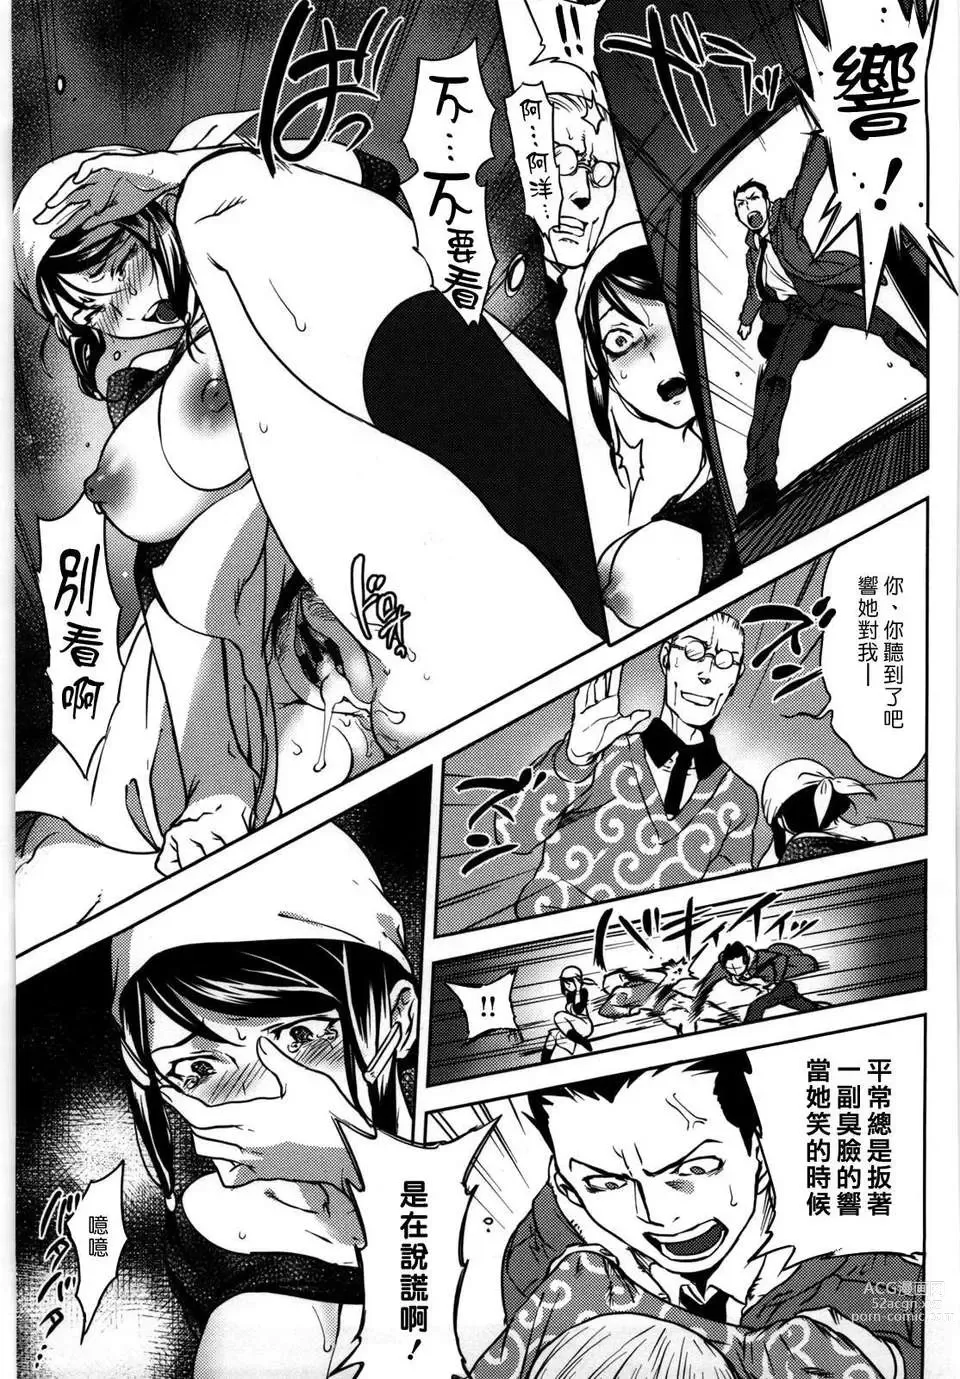 Page 205 of manga Koibito Rule